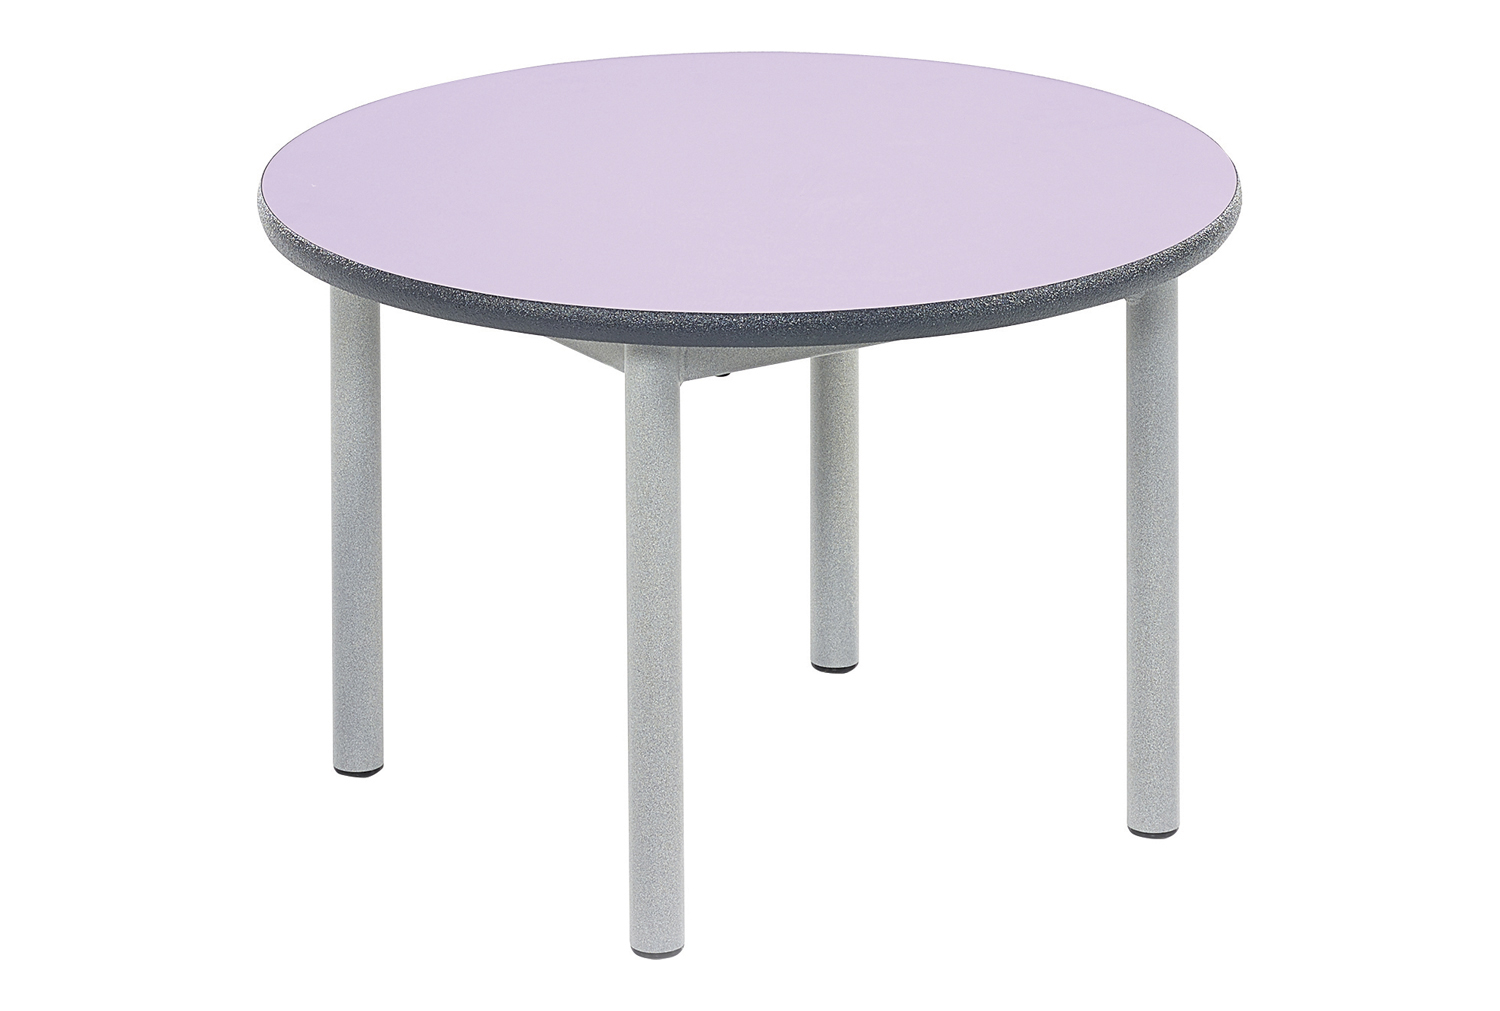 Qty 4 - RT32 Circular Coffee Table, Charcoal Frame, Beech Top, PU Charcoal